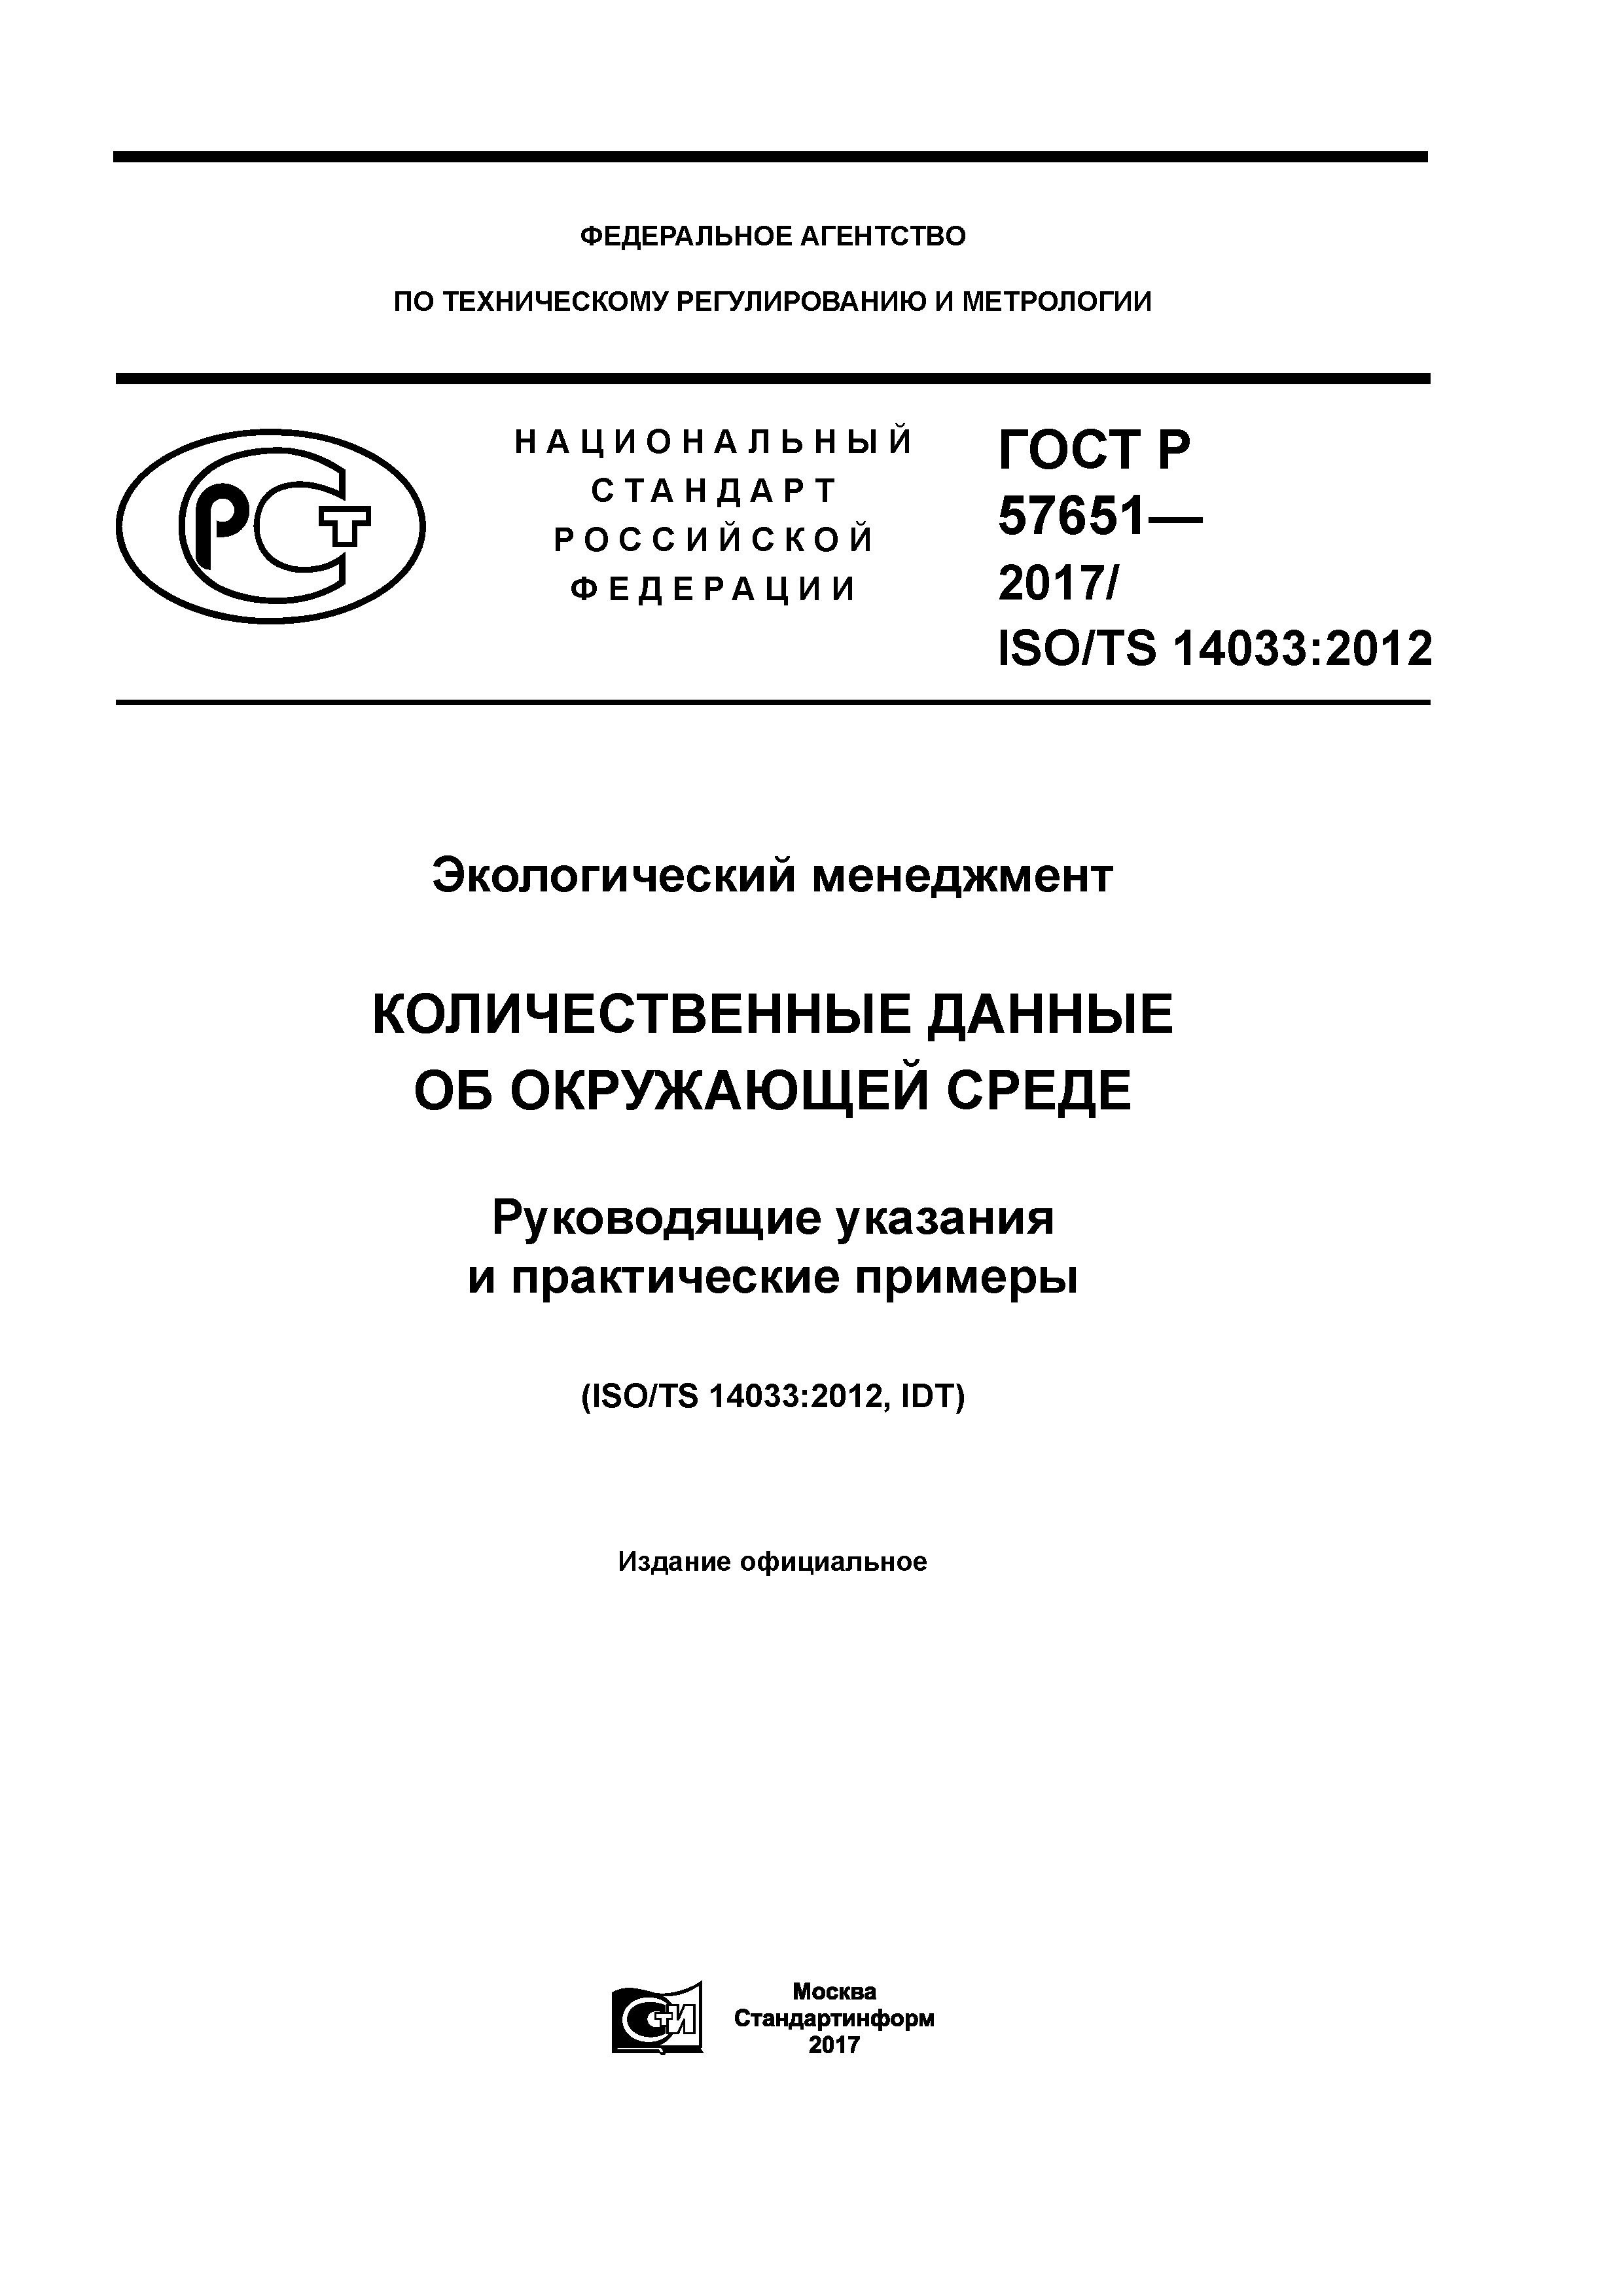 ГОСТ Р 57651-2017